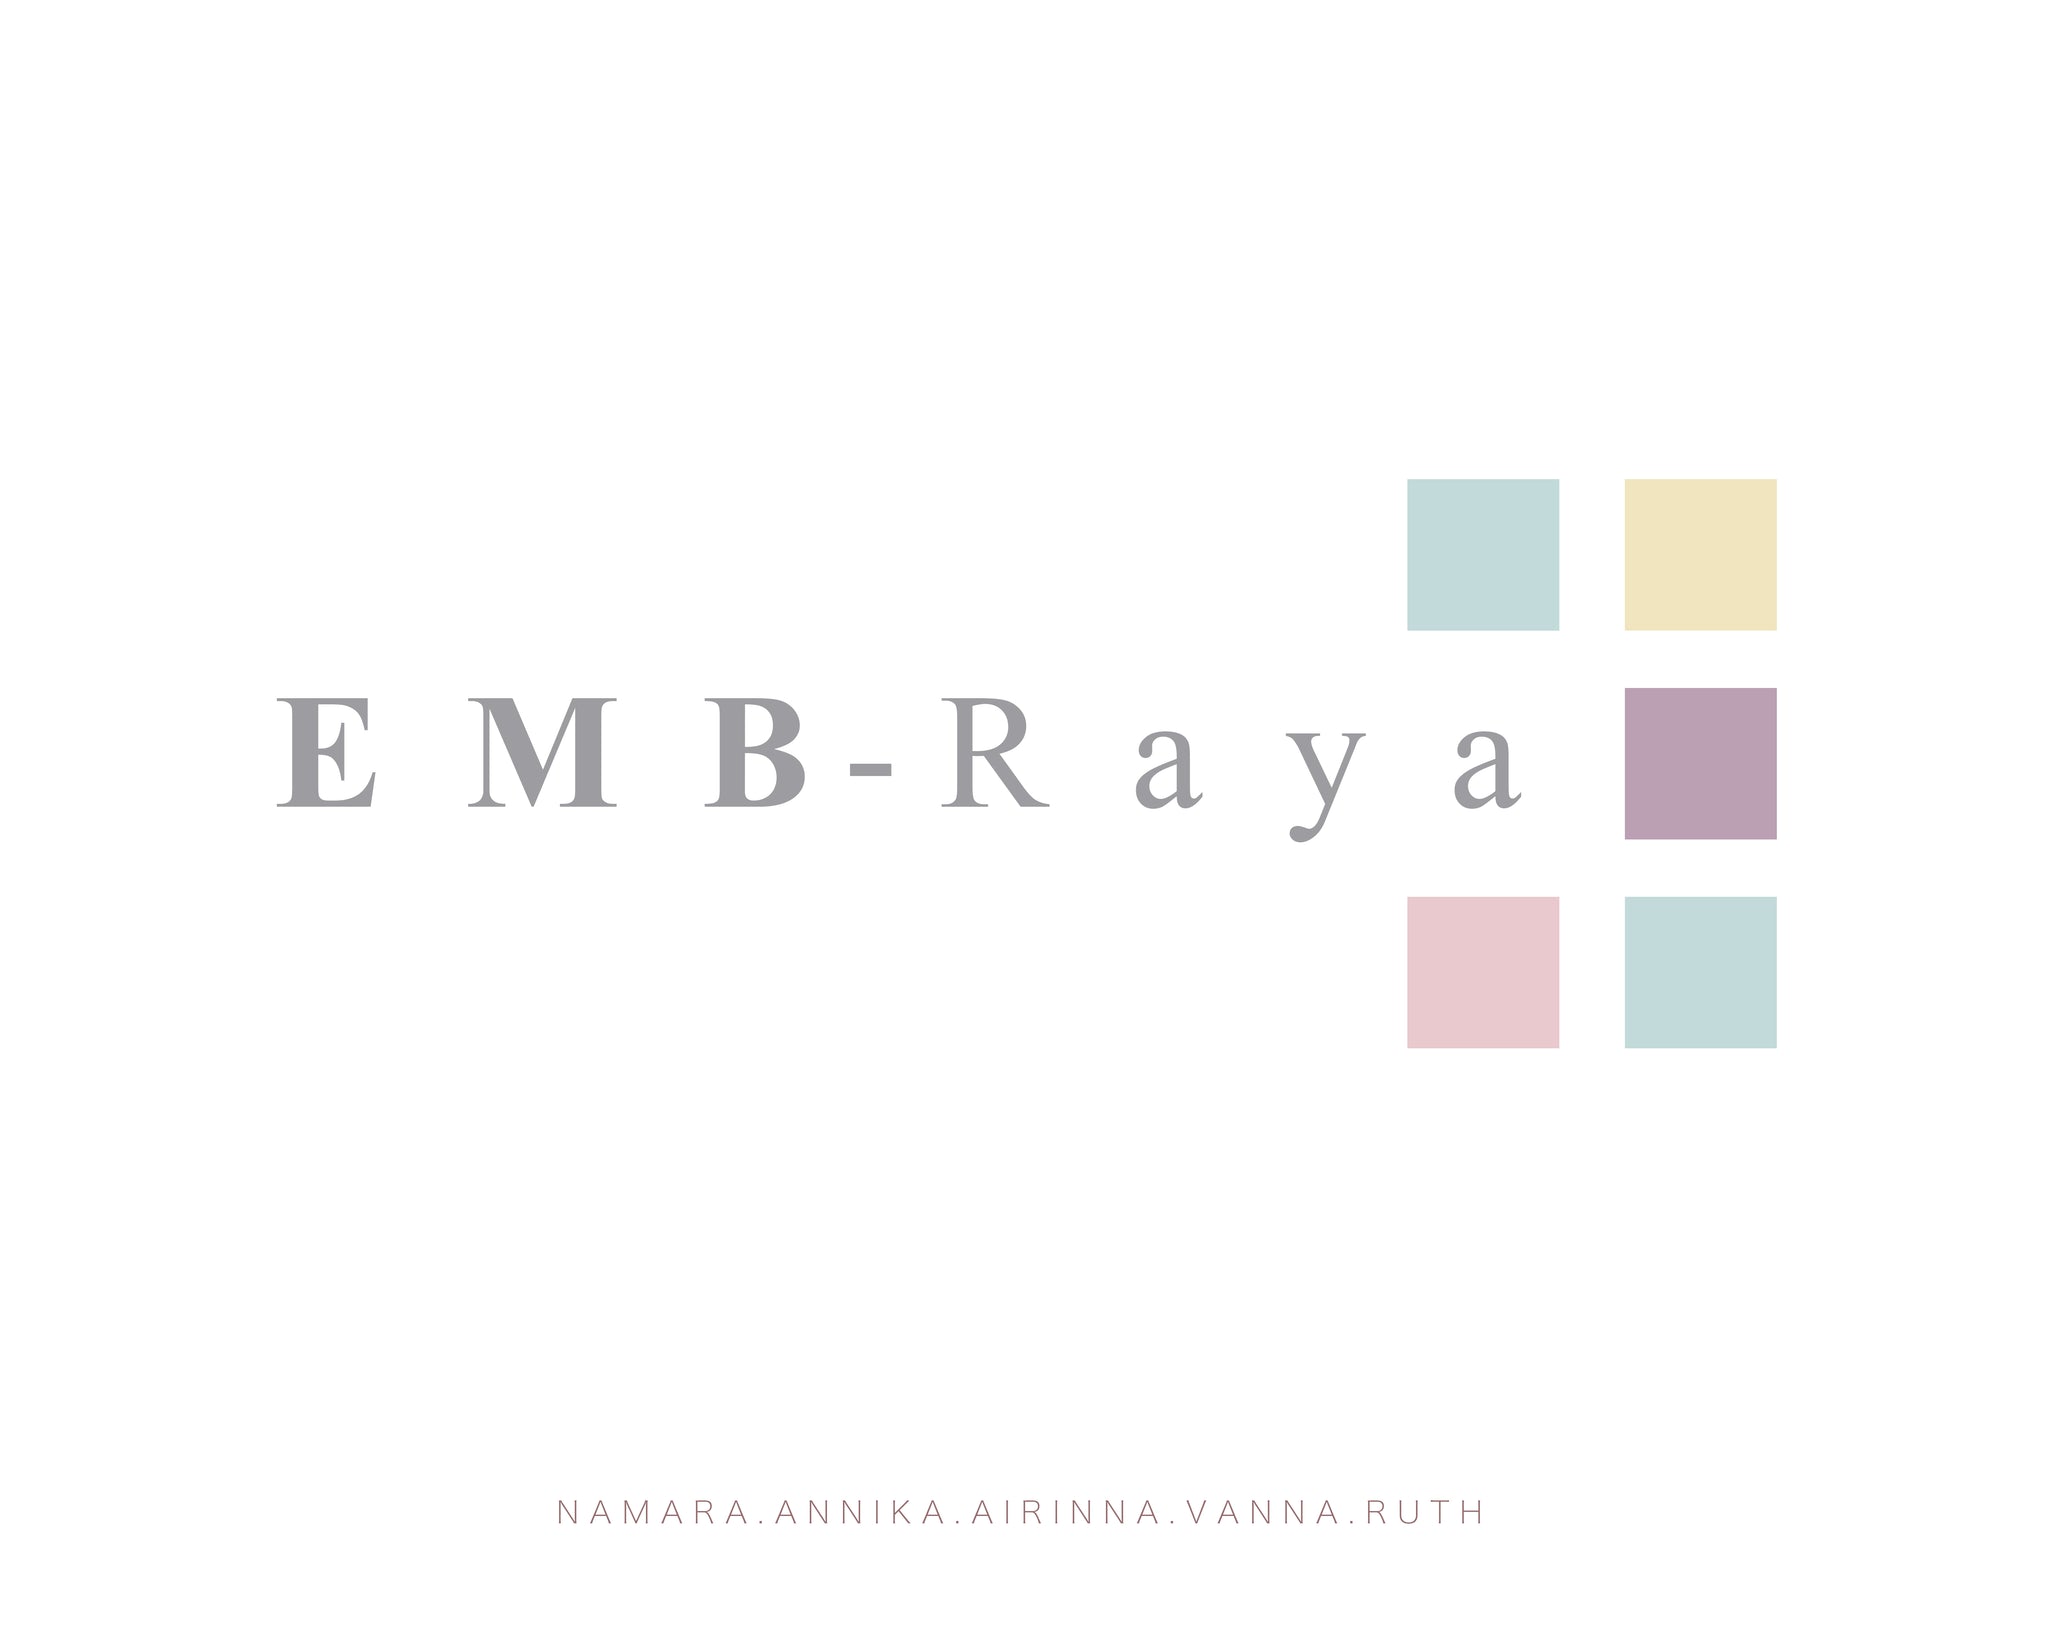 Emb-raya collections